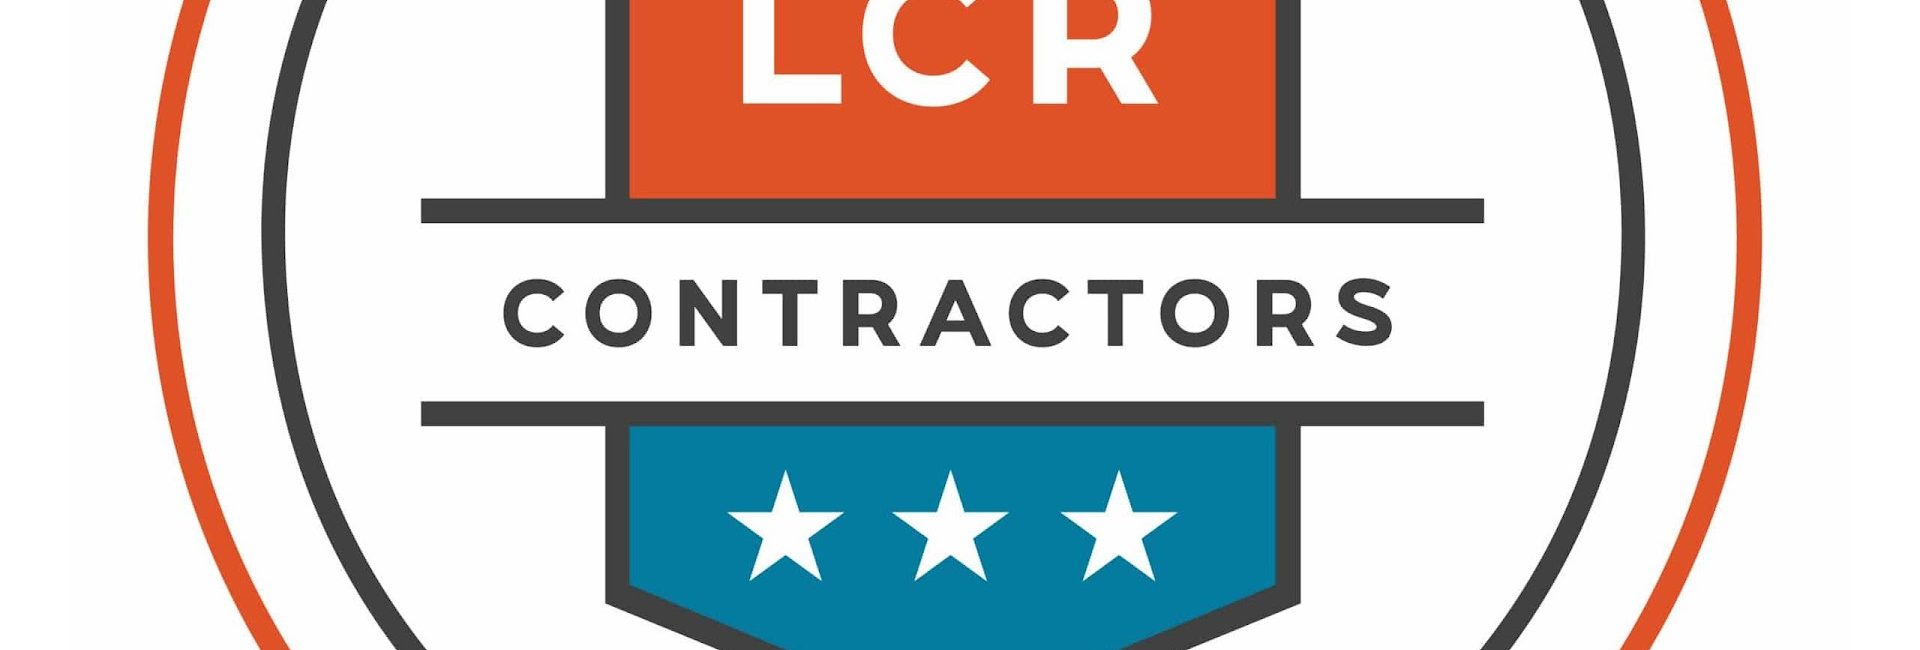 LCR Contractors 3